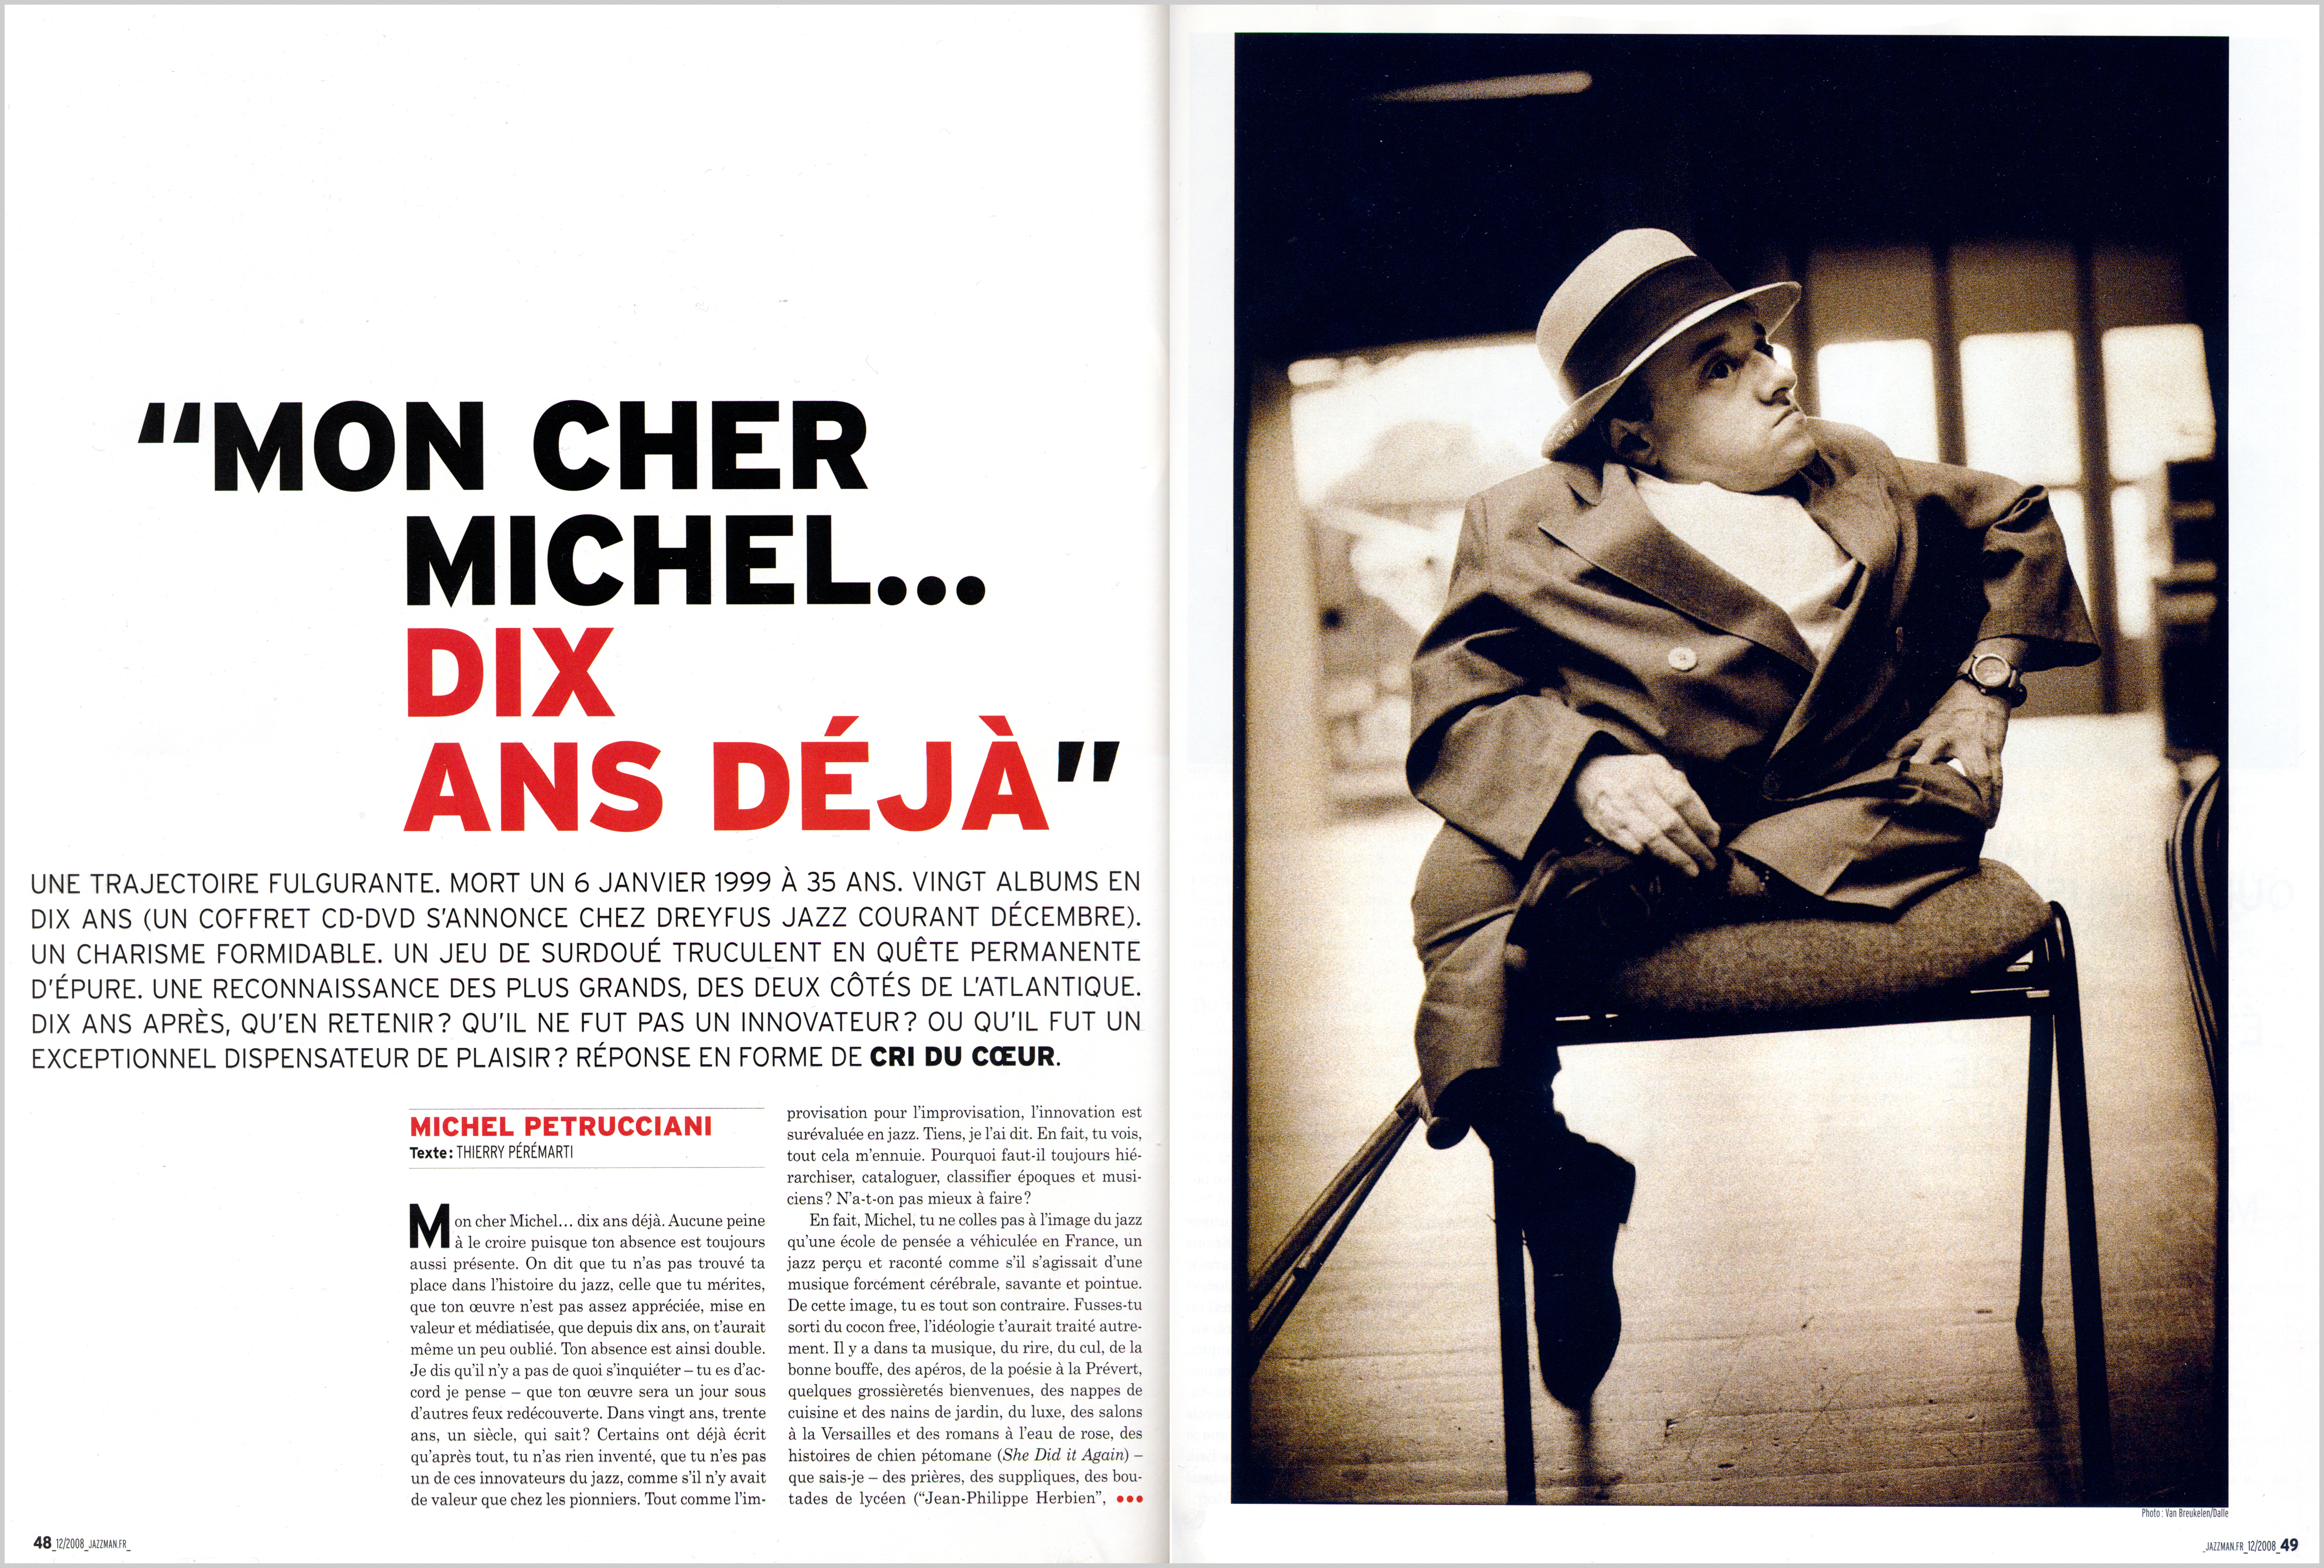  Michel Petruciani for french magazine. 